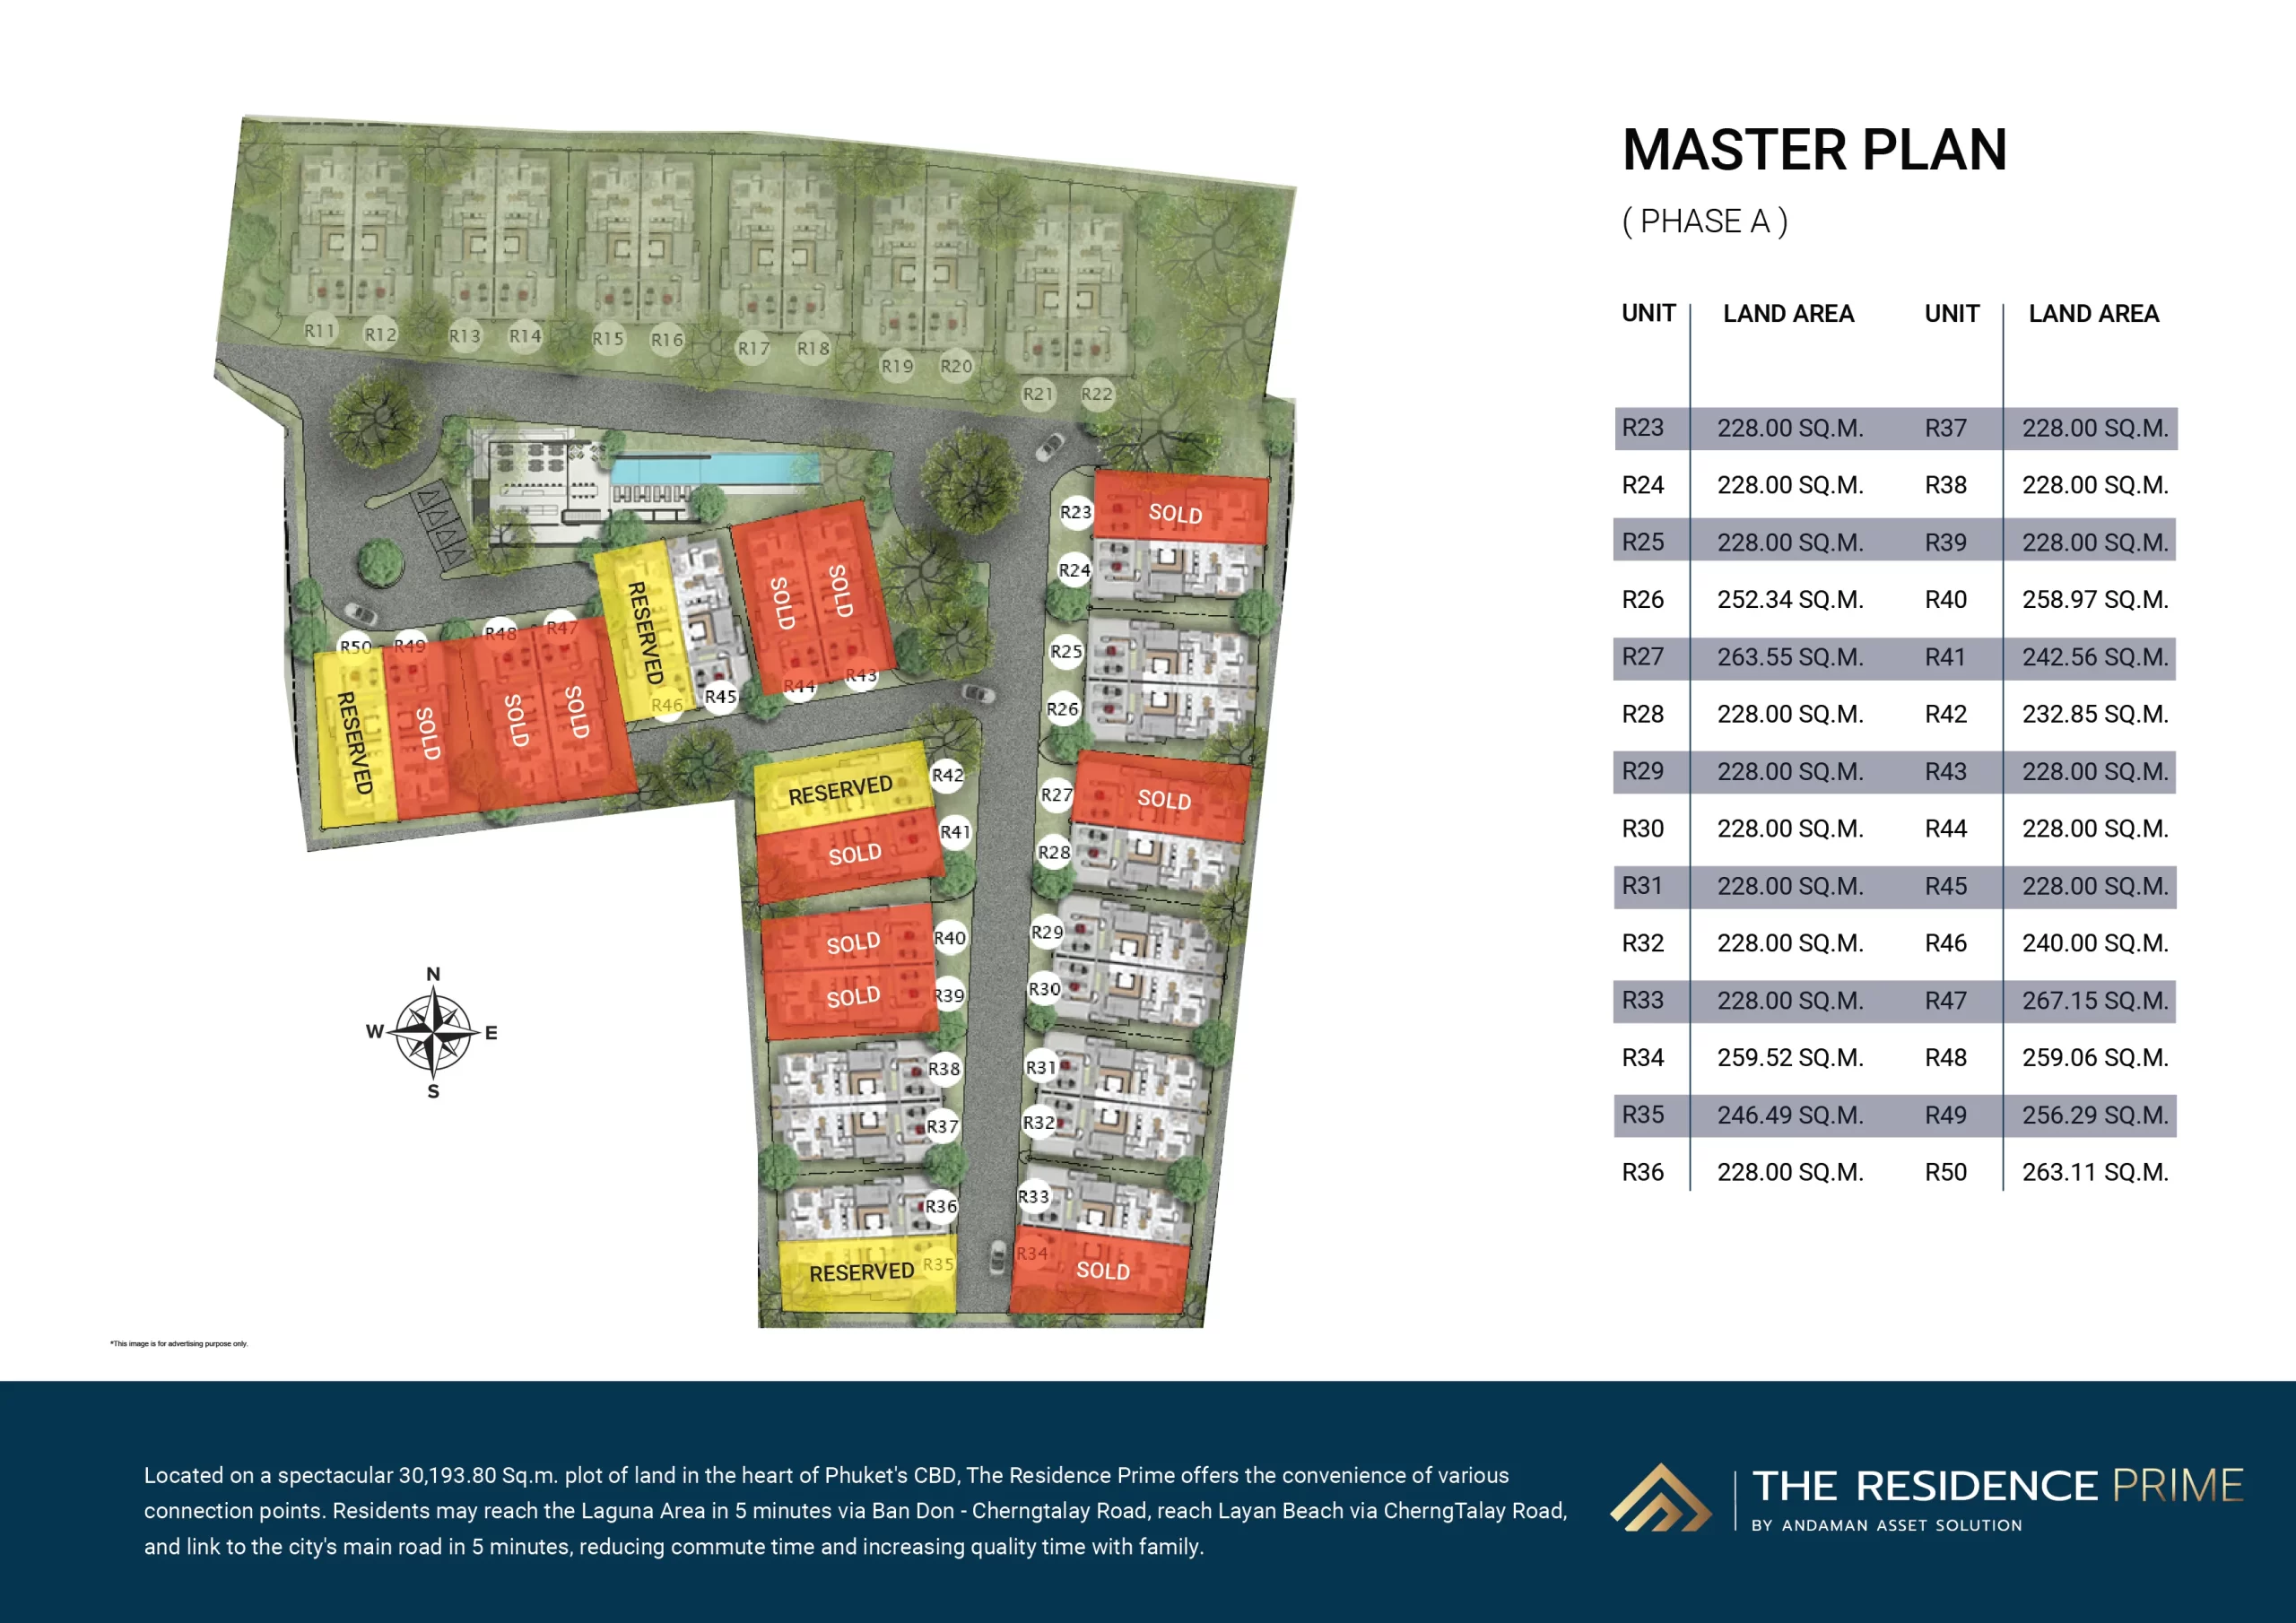 The Residence Prime - Master Plan Update